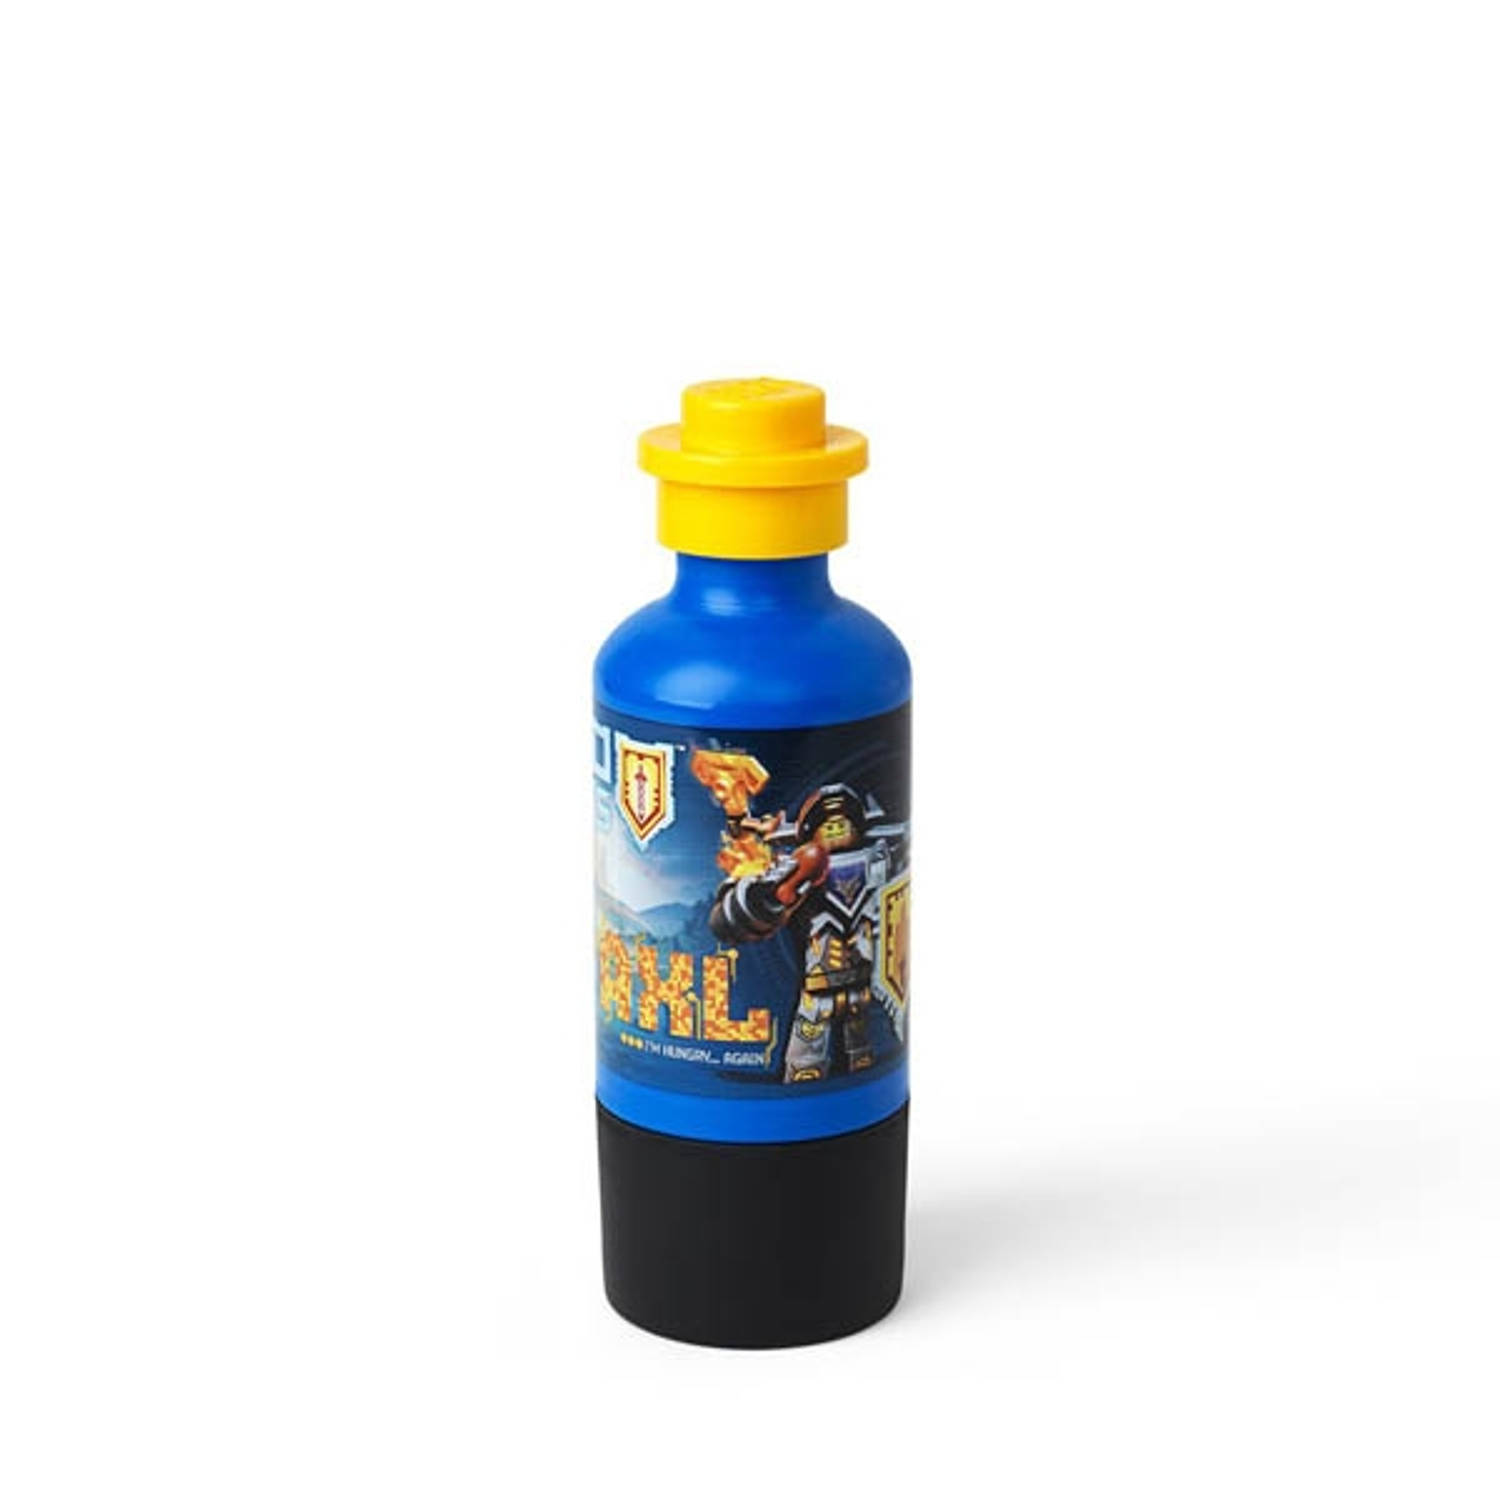 Lego Nexo Knights drinkbeker